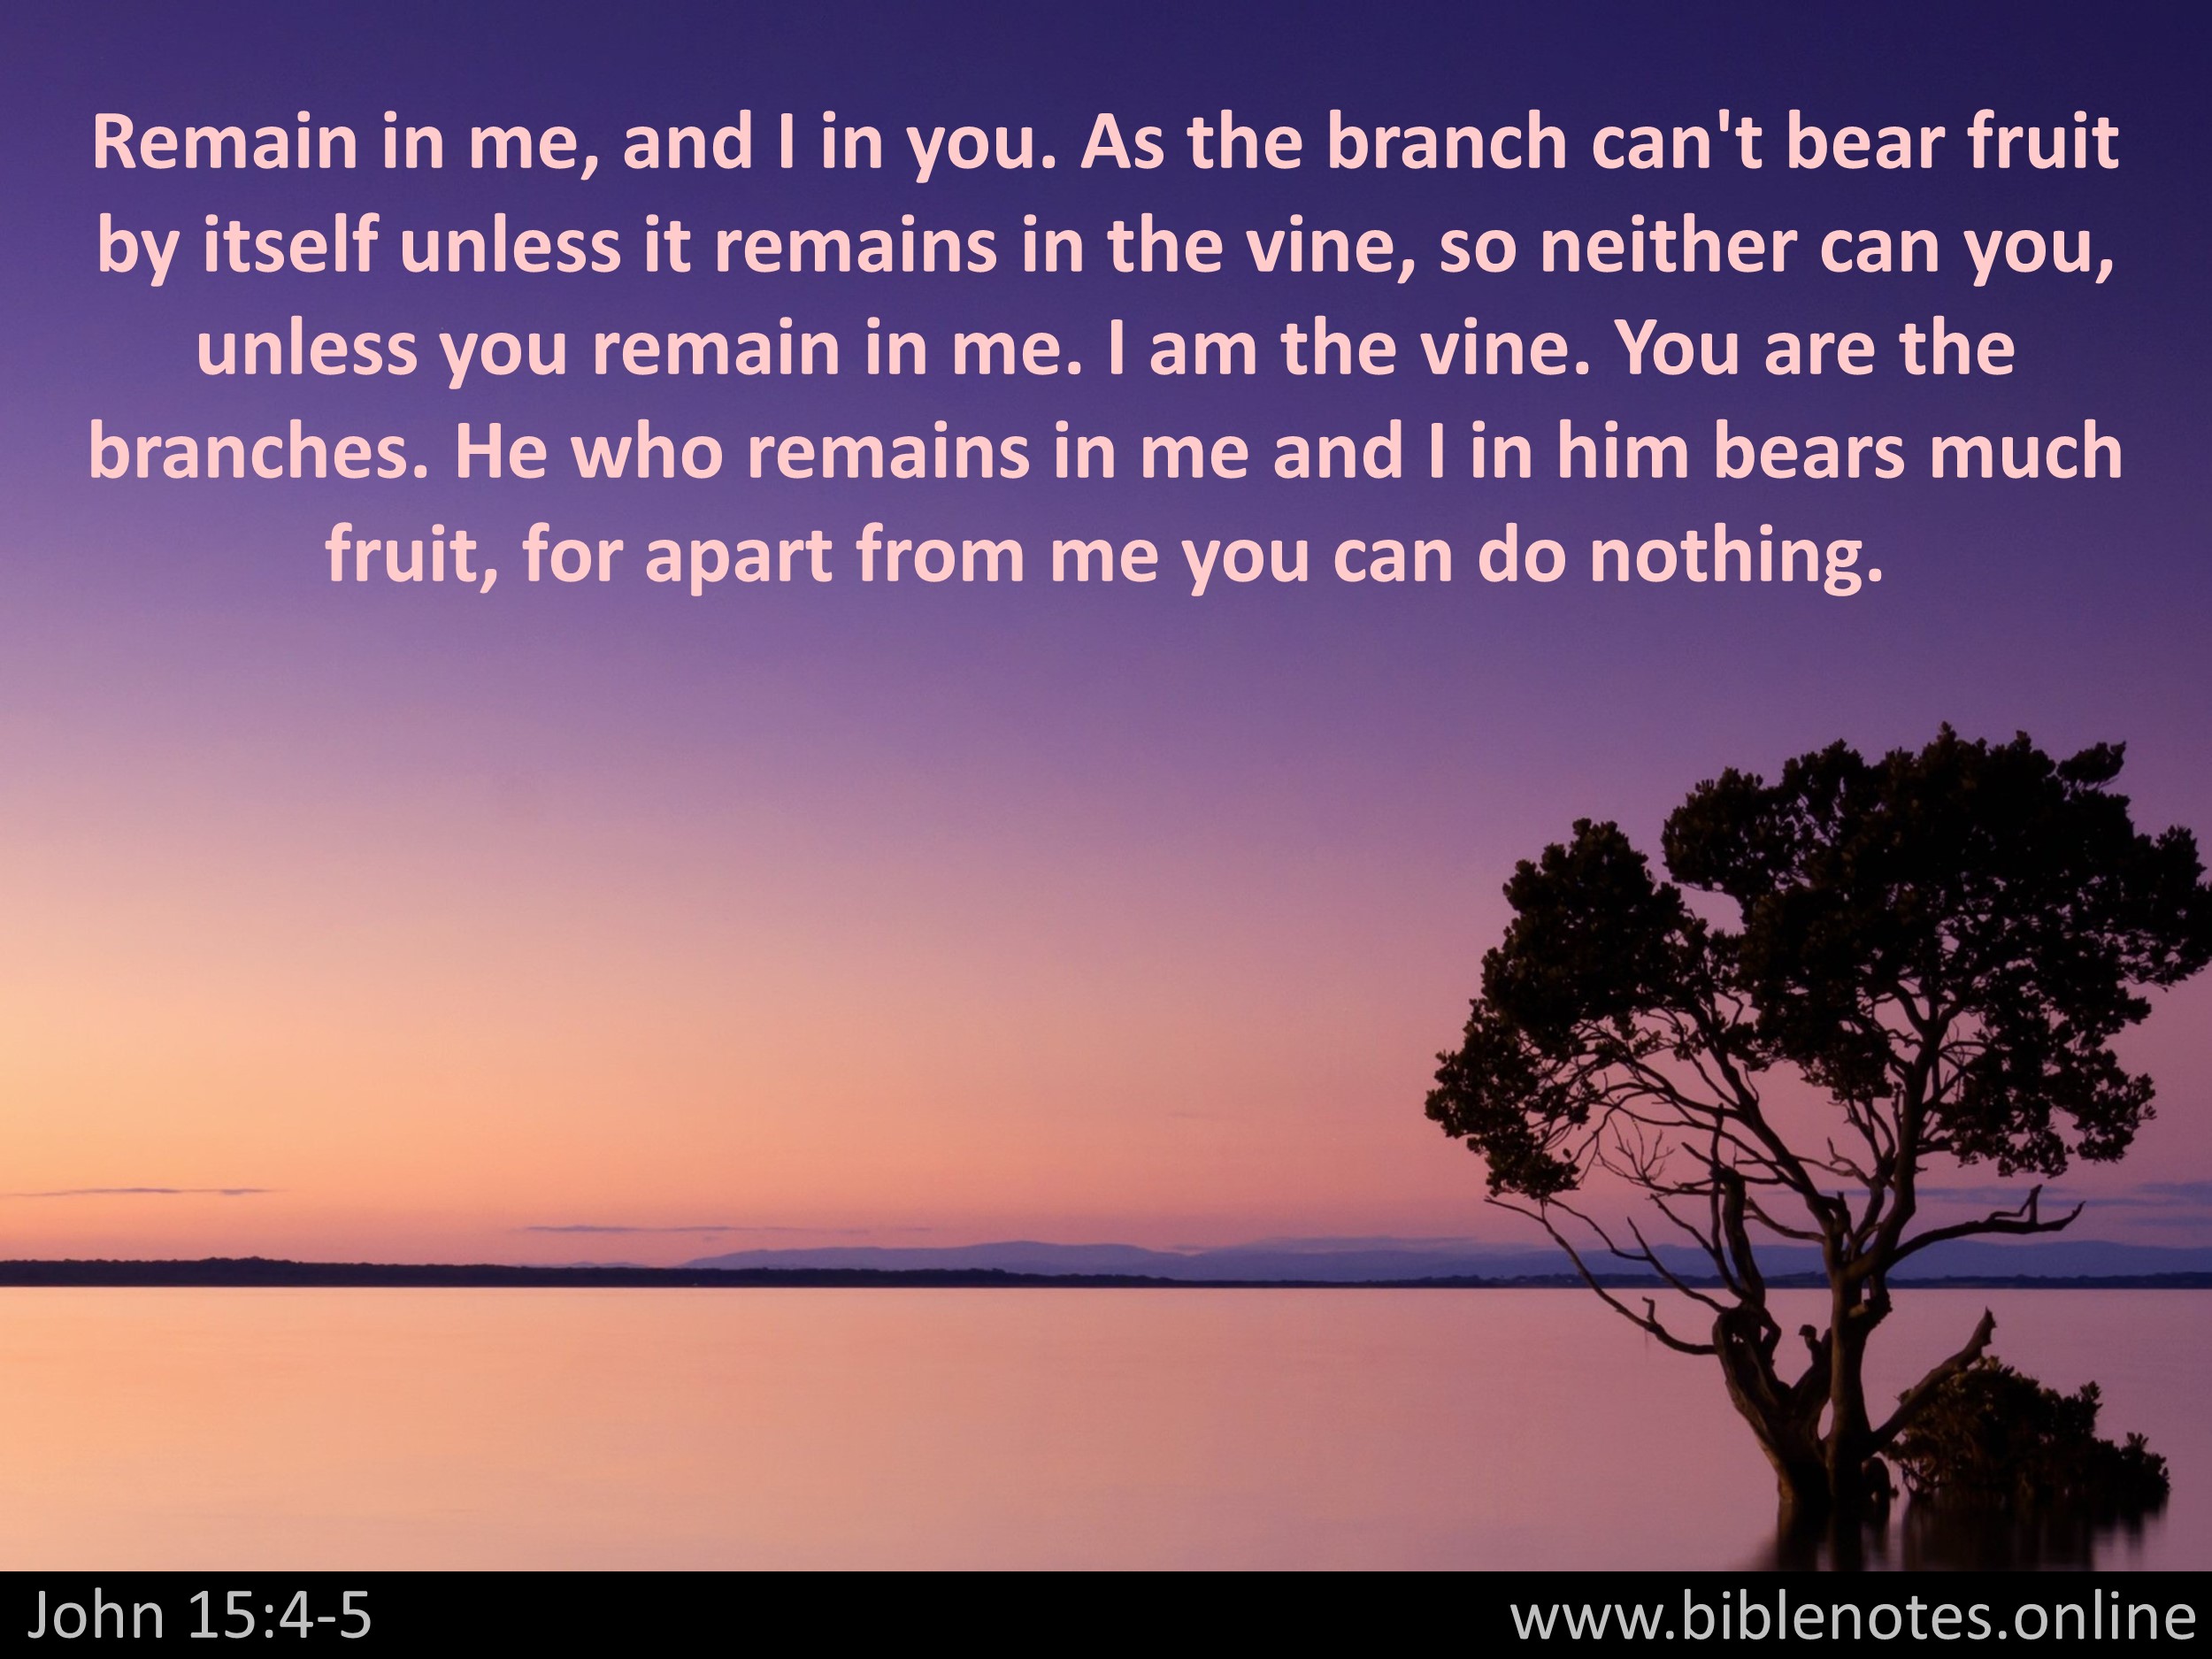 Bible Verse from John Chapter 15